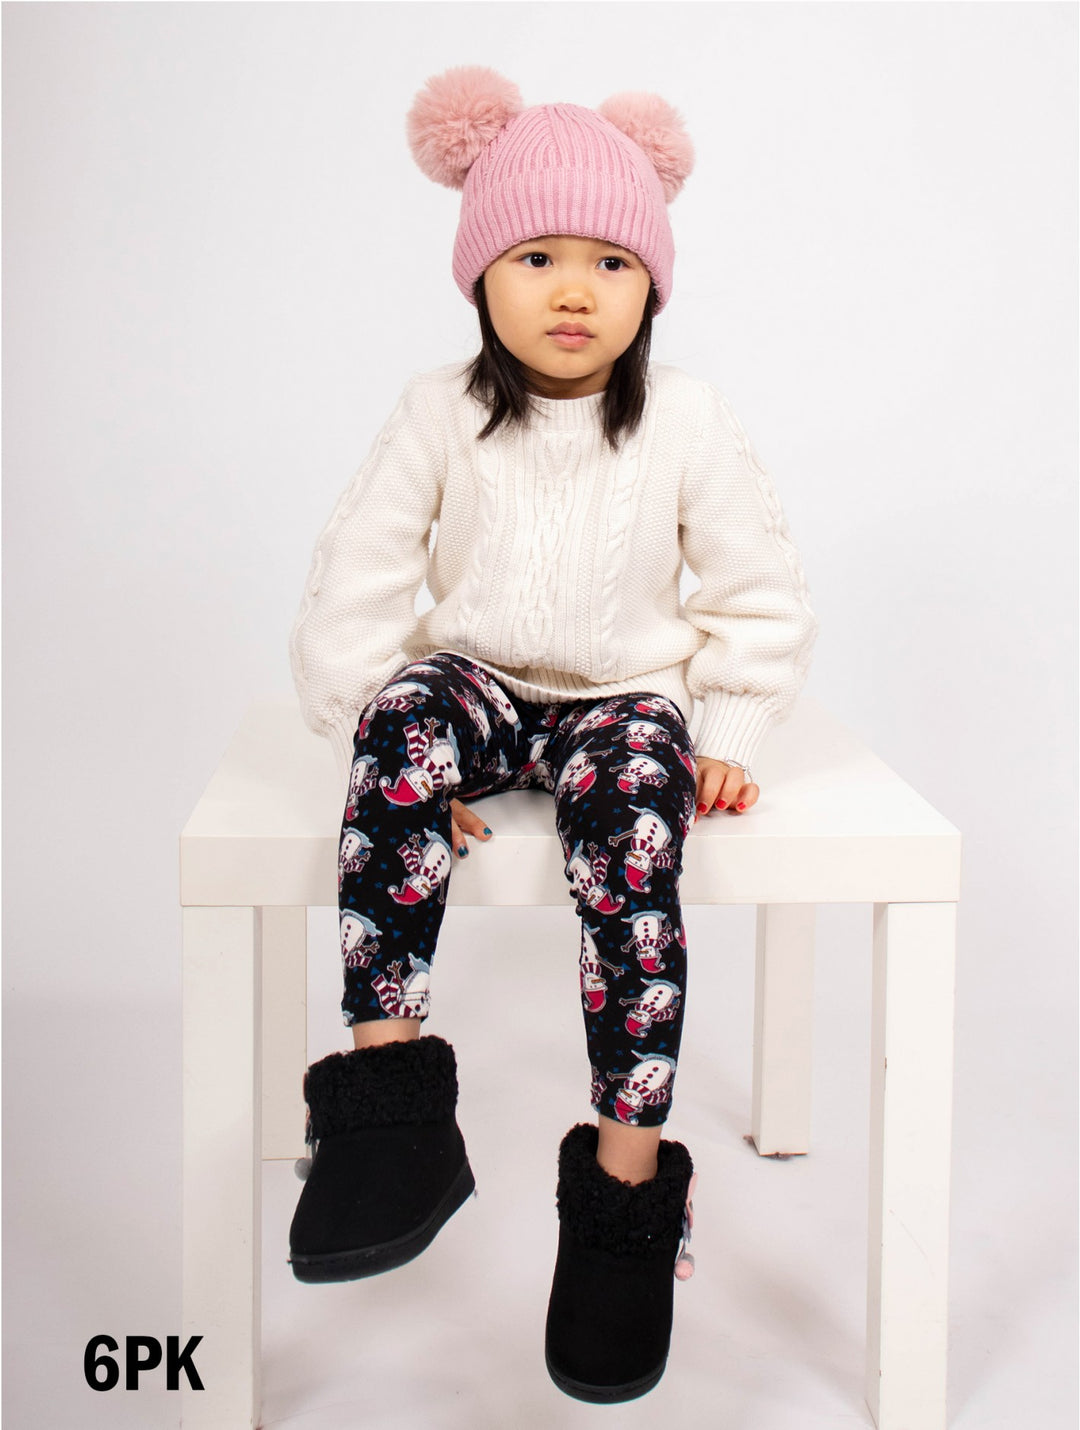 Cherie Bliss Kids Pink Hat - HAT10996PK